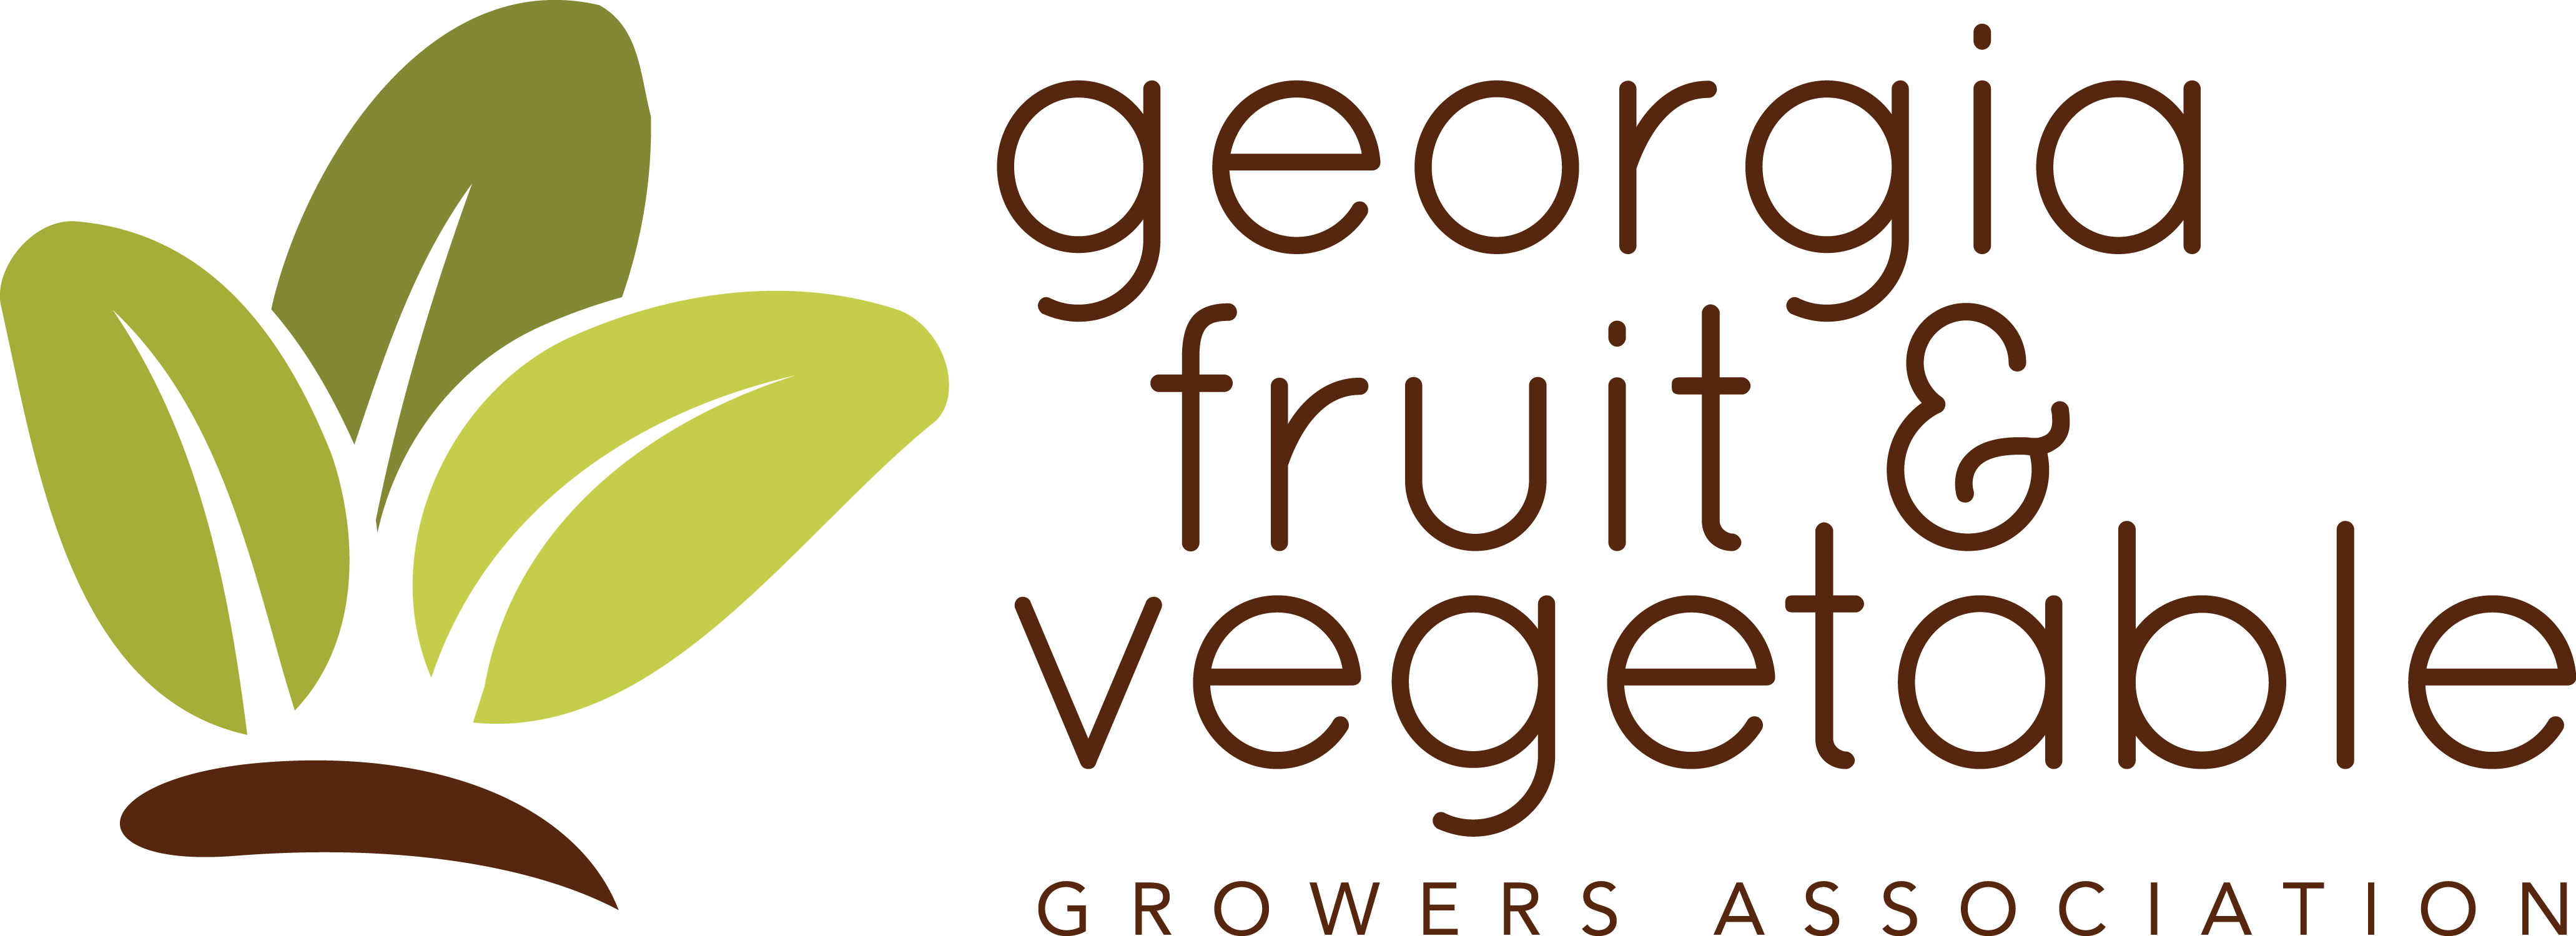 georgia_fruits_vegetable